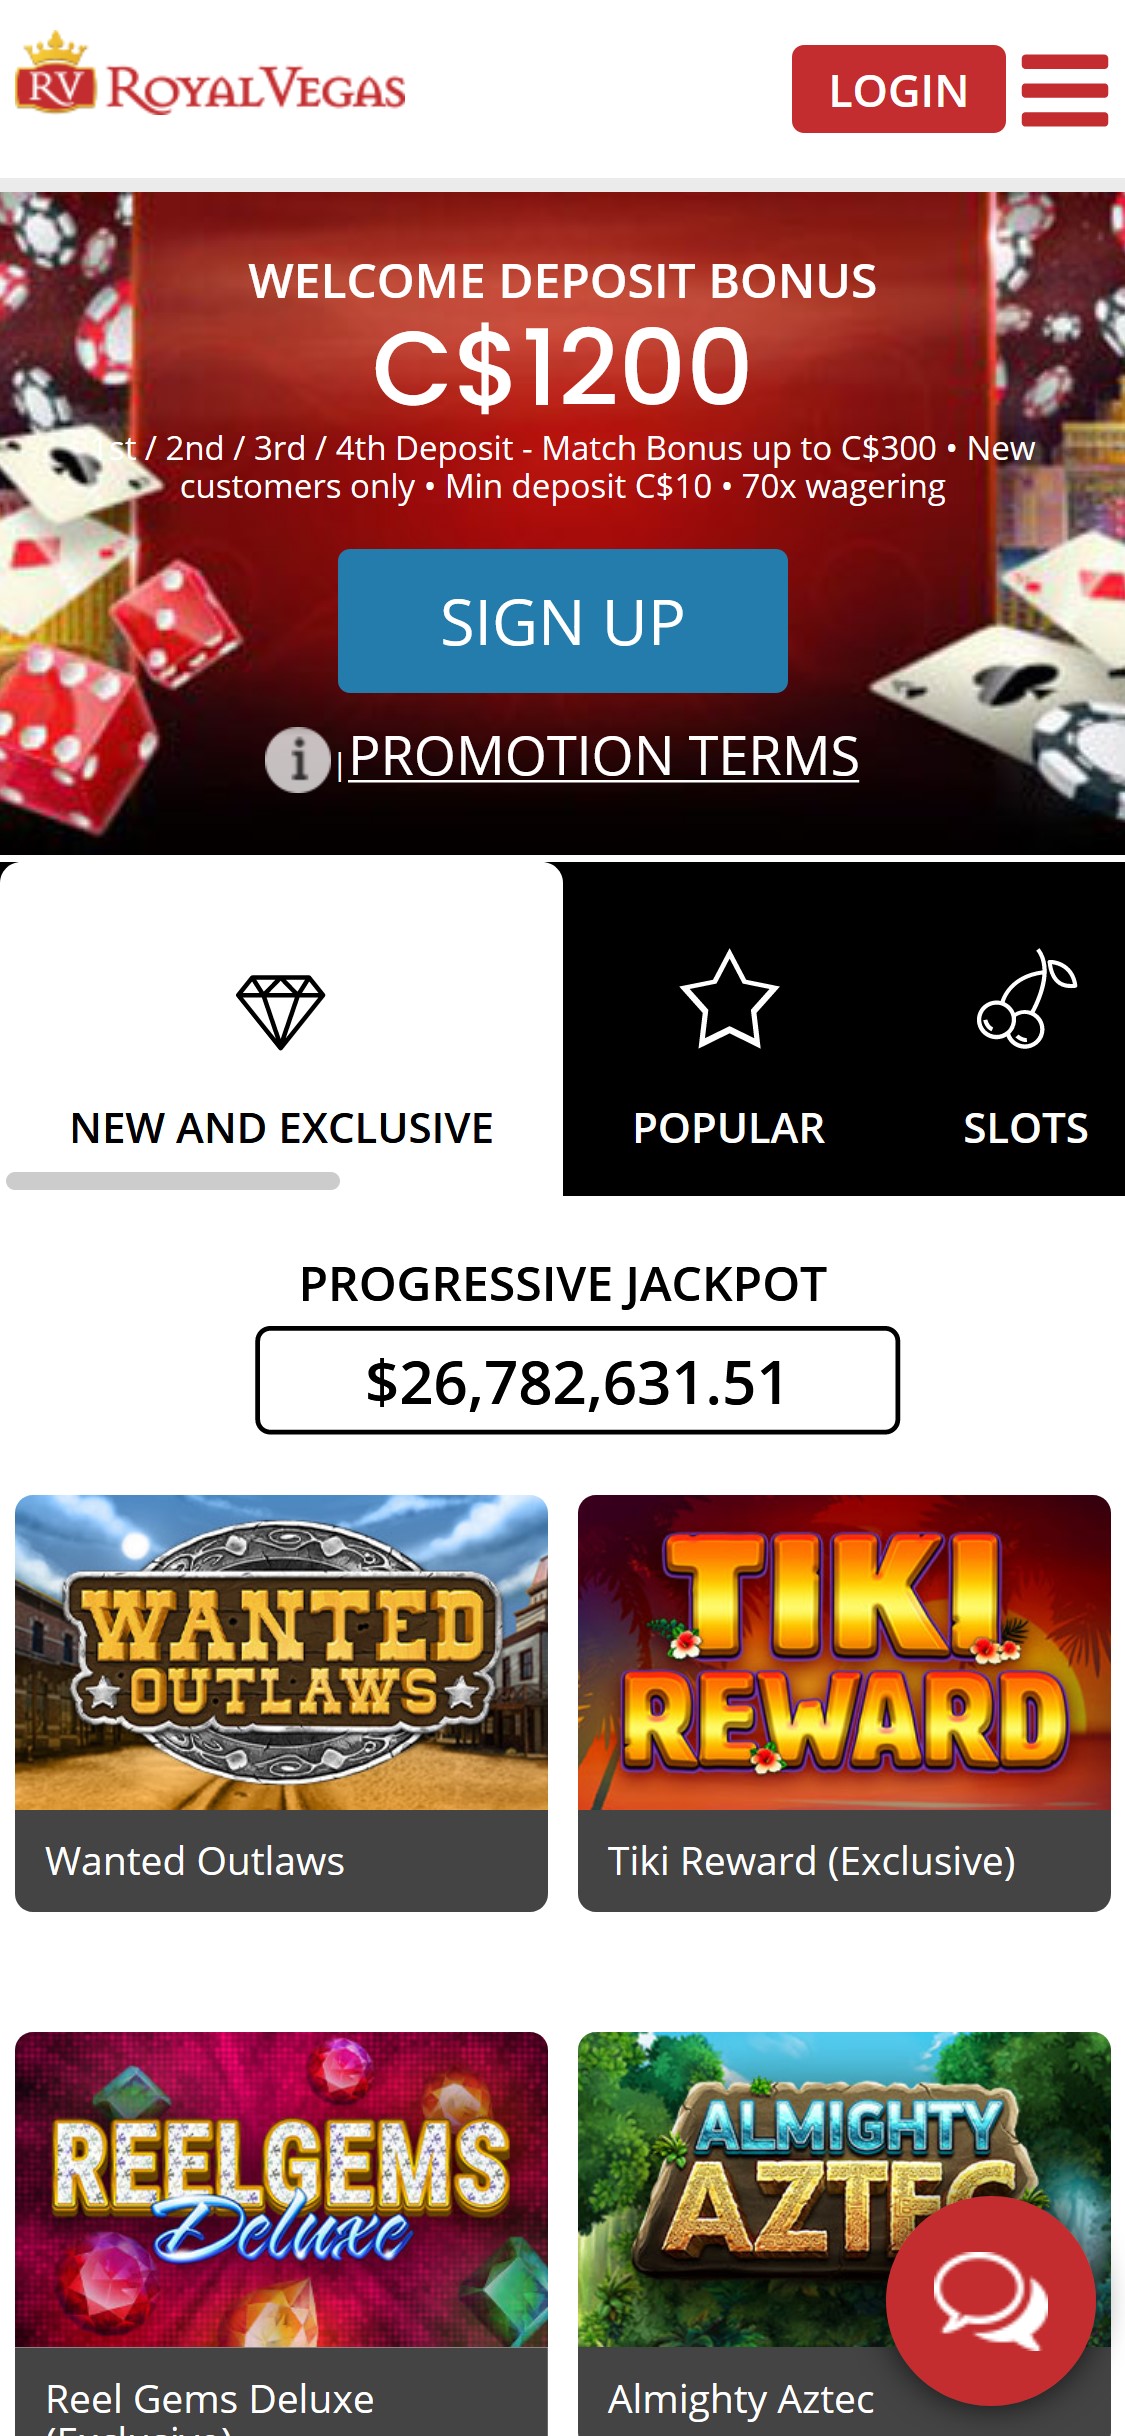 Royal Vegas Casino Mobile Review